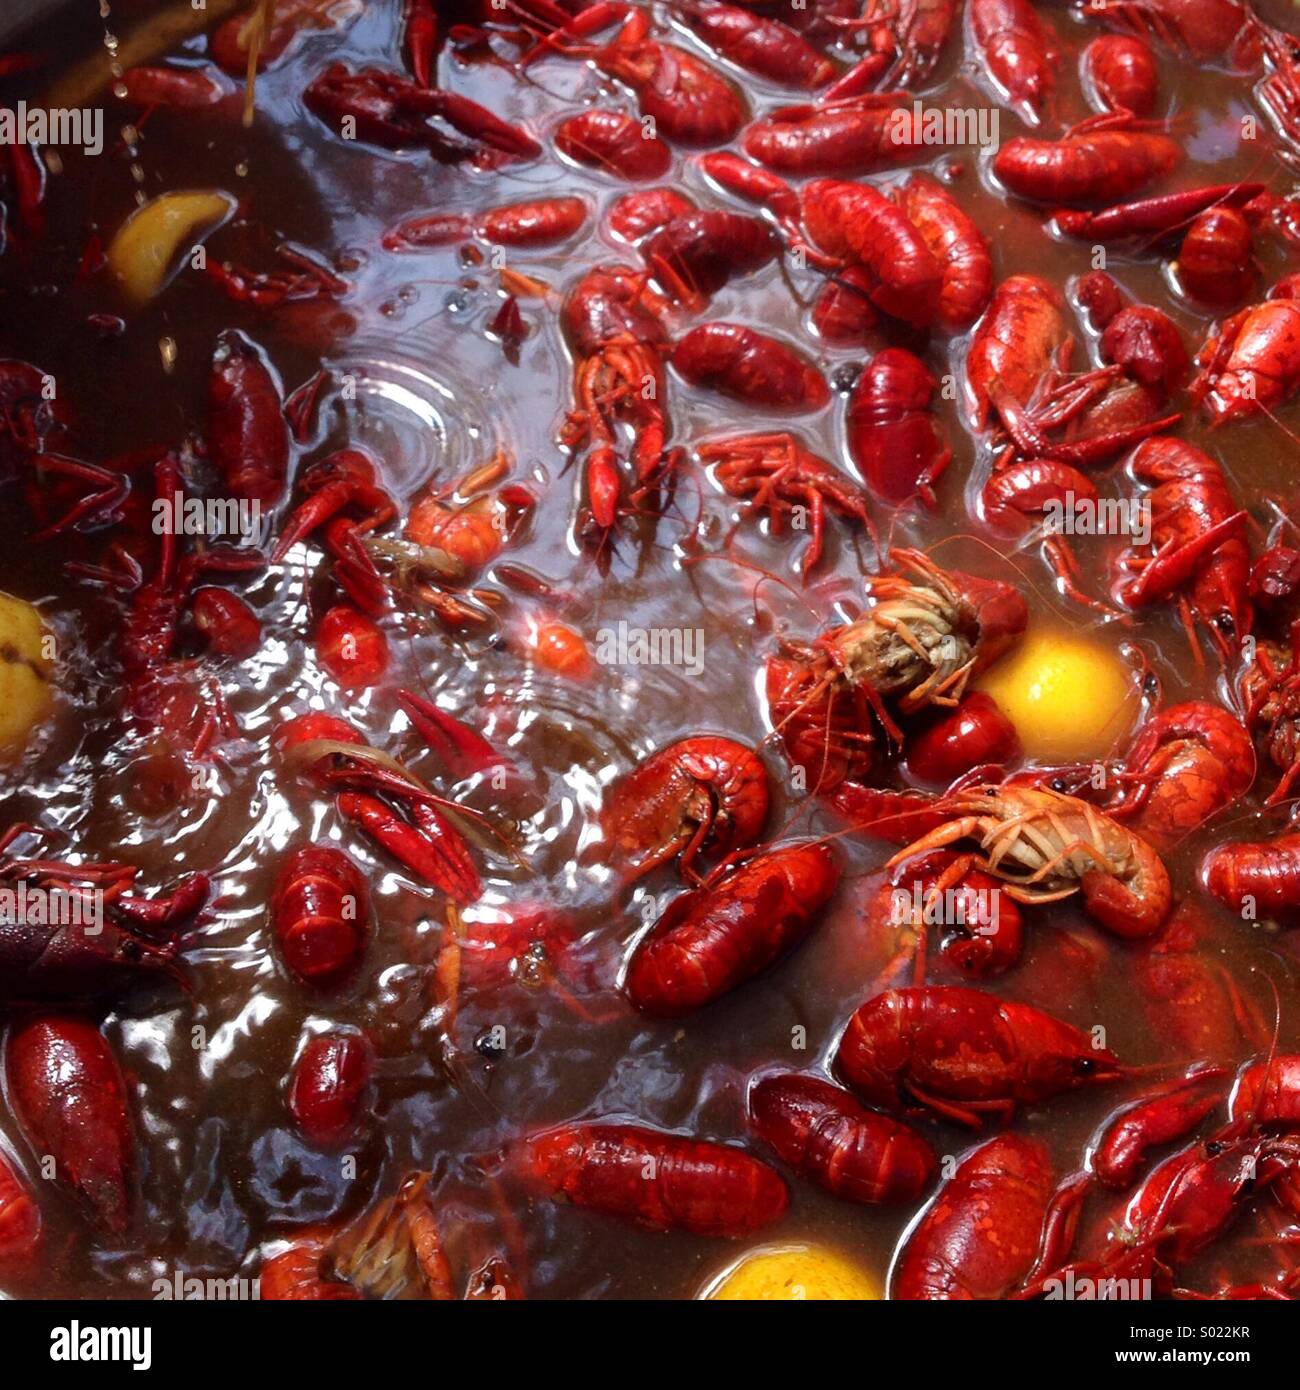 Wild caught Louisiana crawfish boil. Stock Photo